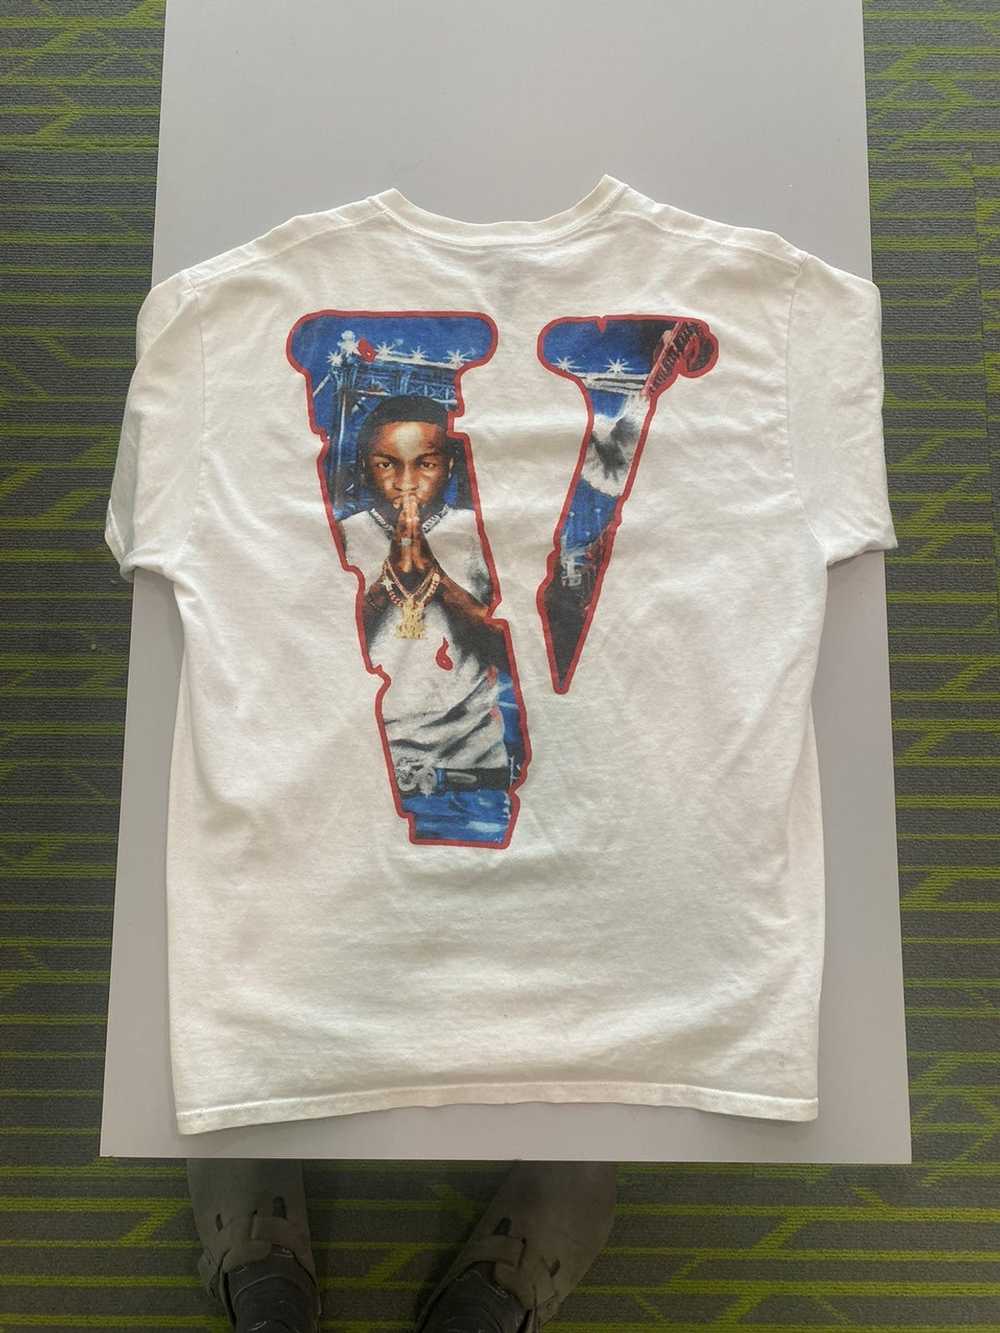 Vlone Vlone x Pop Smoke “The City” T Shirt - image 2